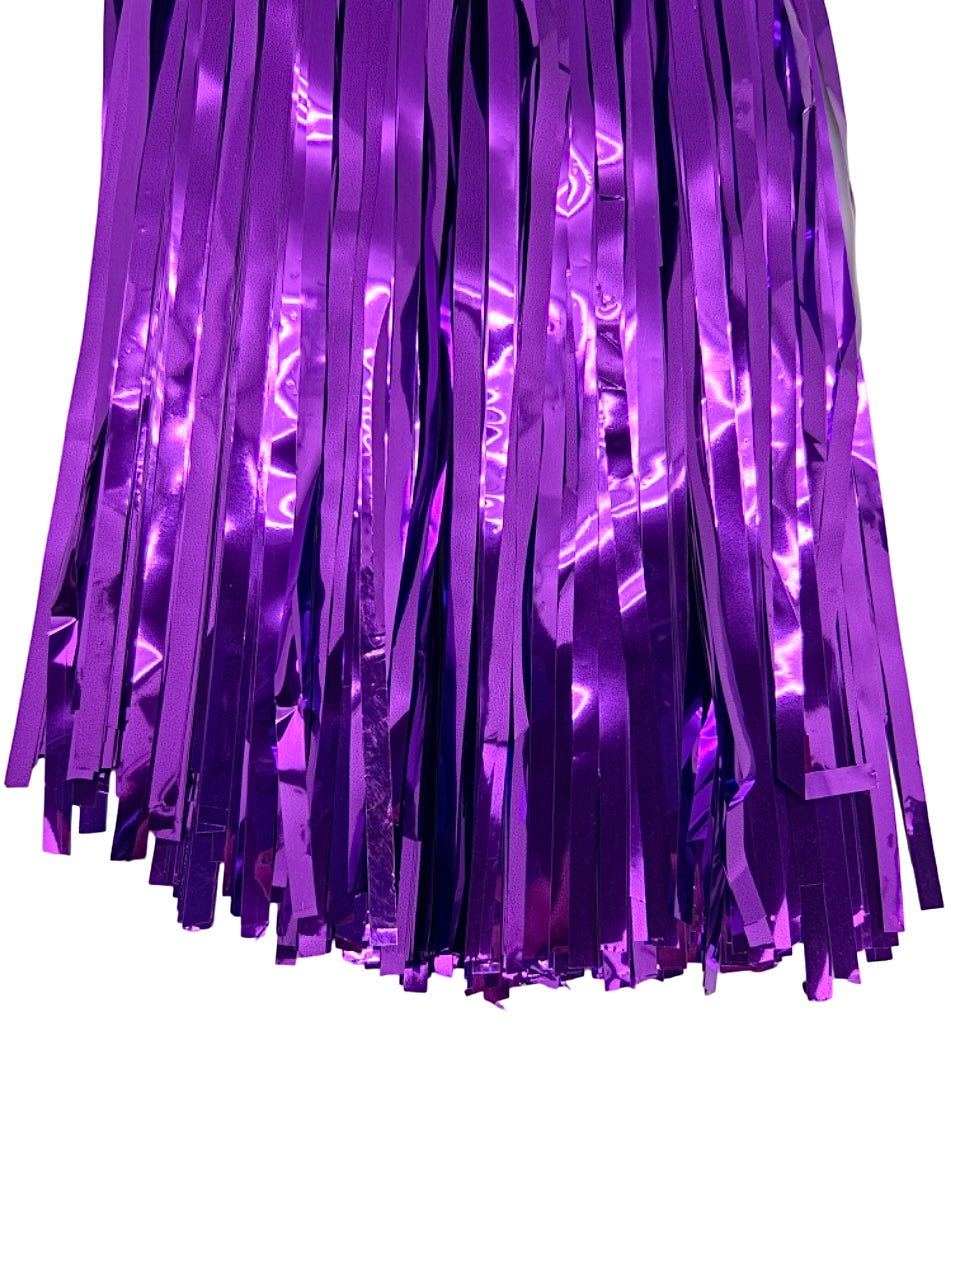 29" x 14' Purple Fringe Skirting